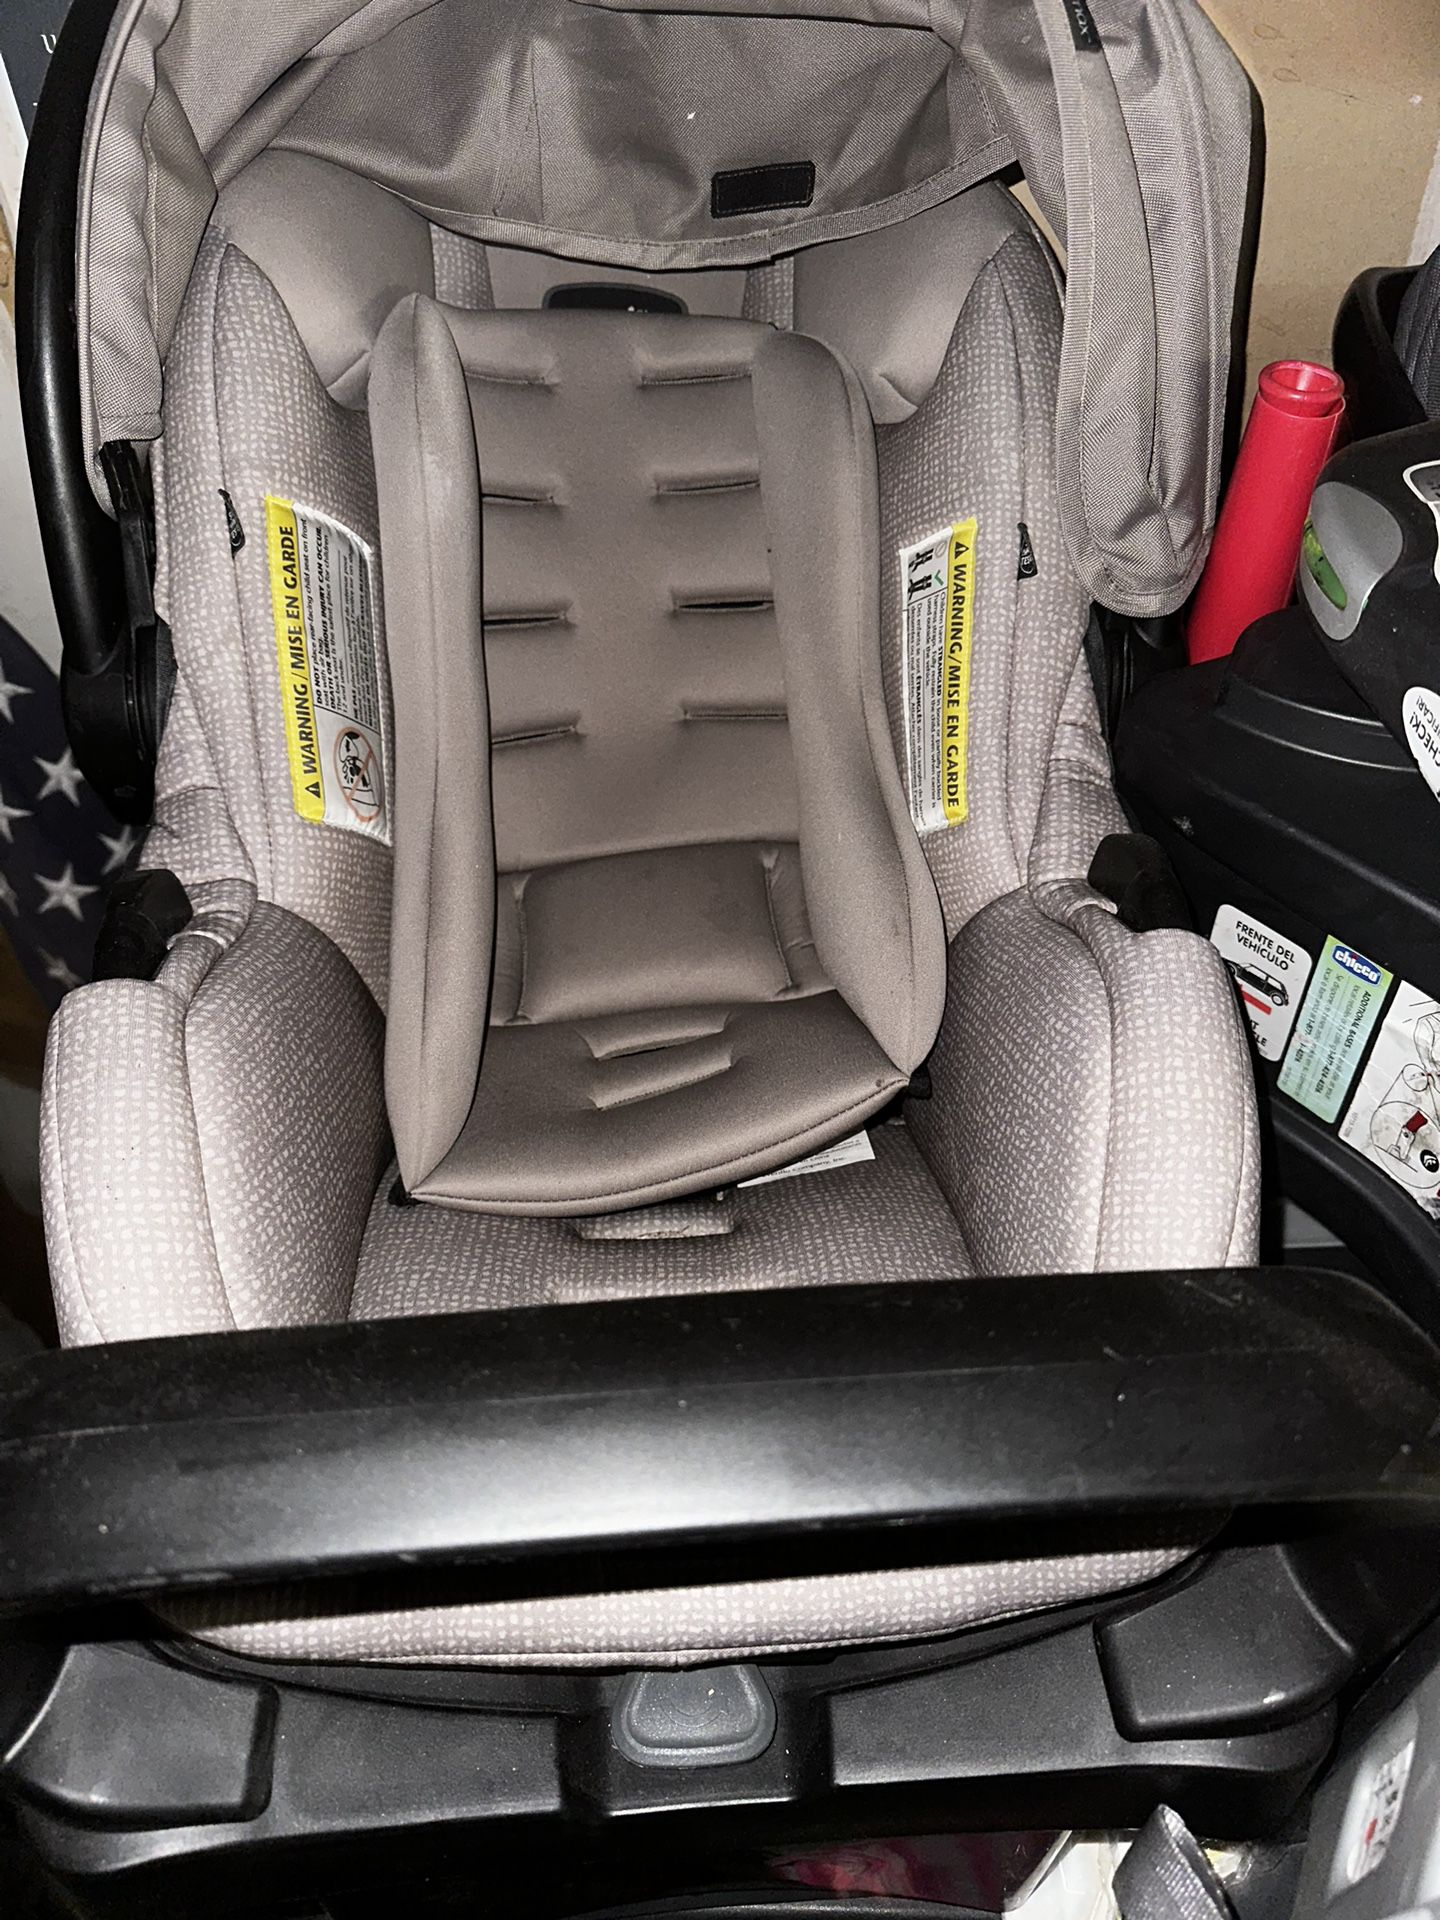 Evenflo Safemax Infant Car Seat And Base